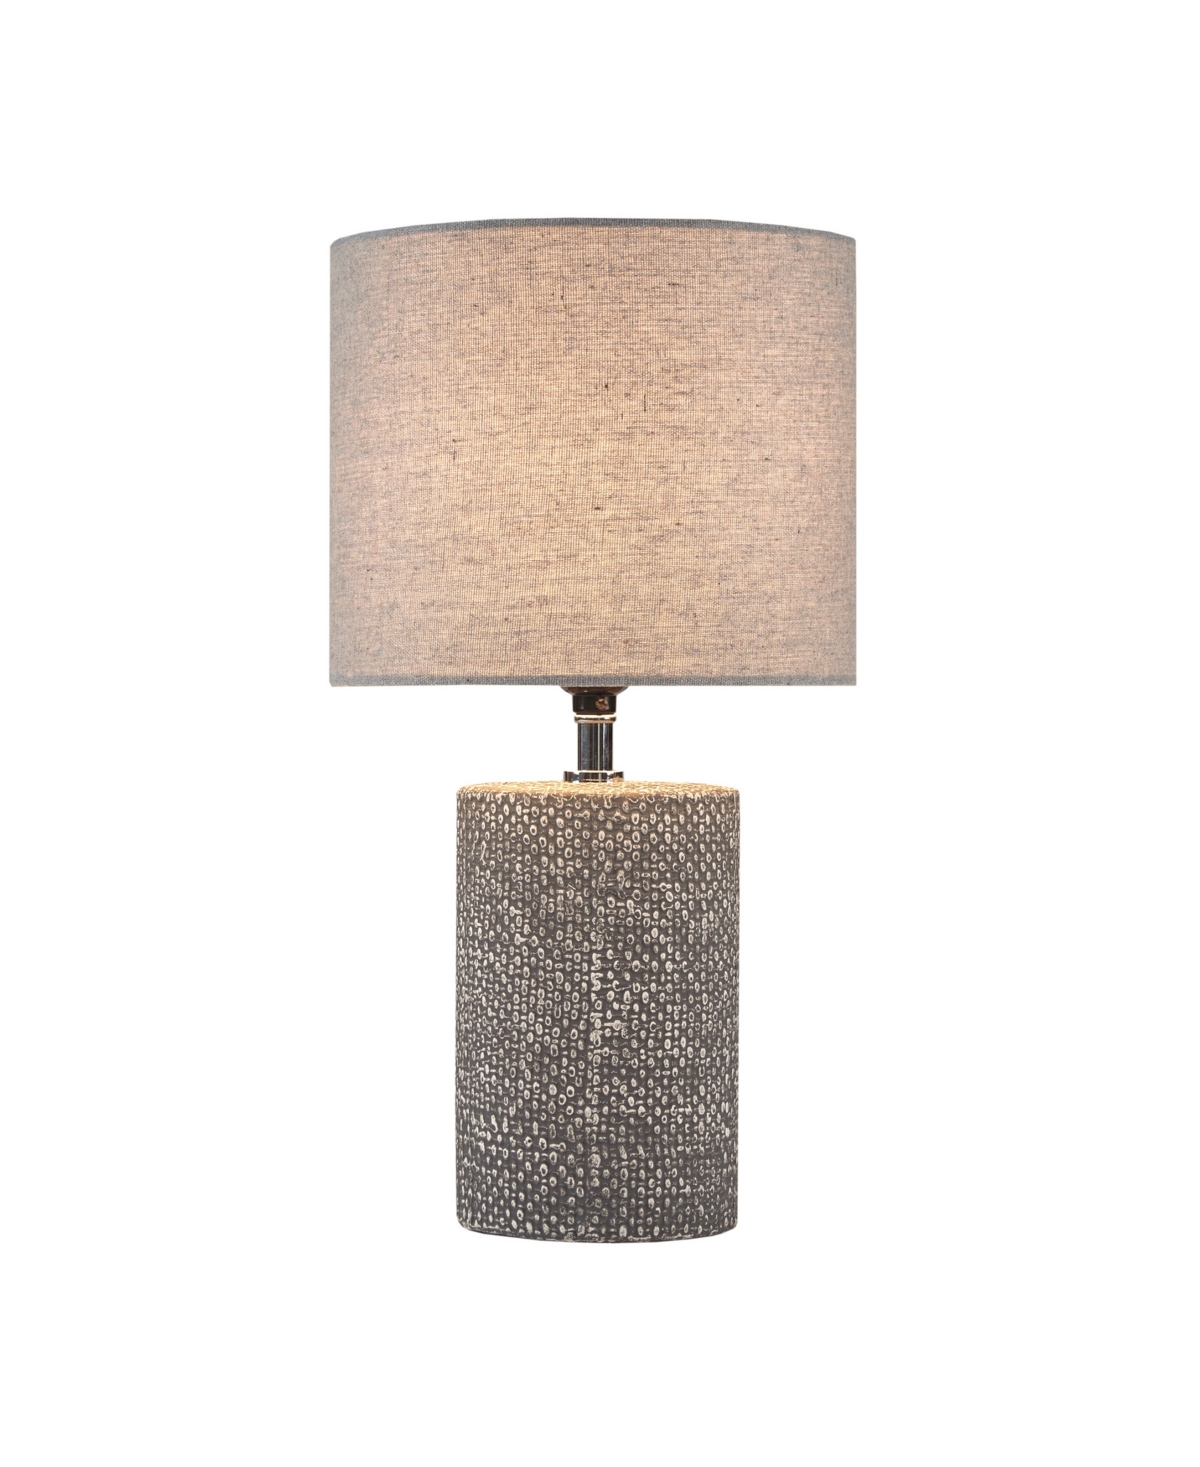 510 Design Bayard Table Lamp In Gray